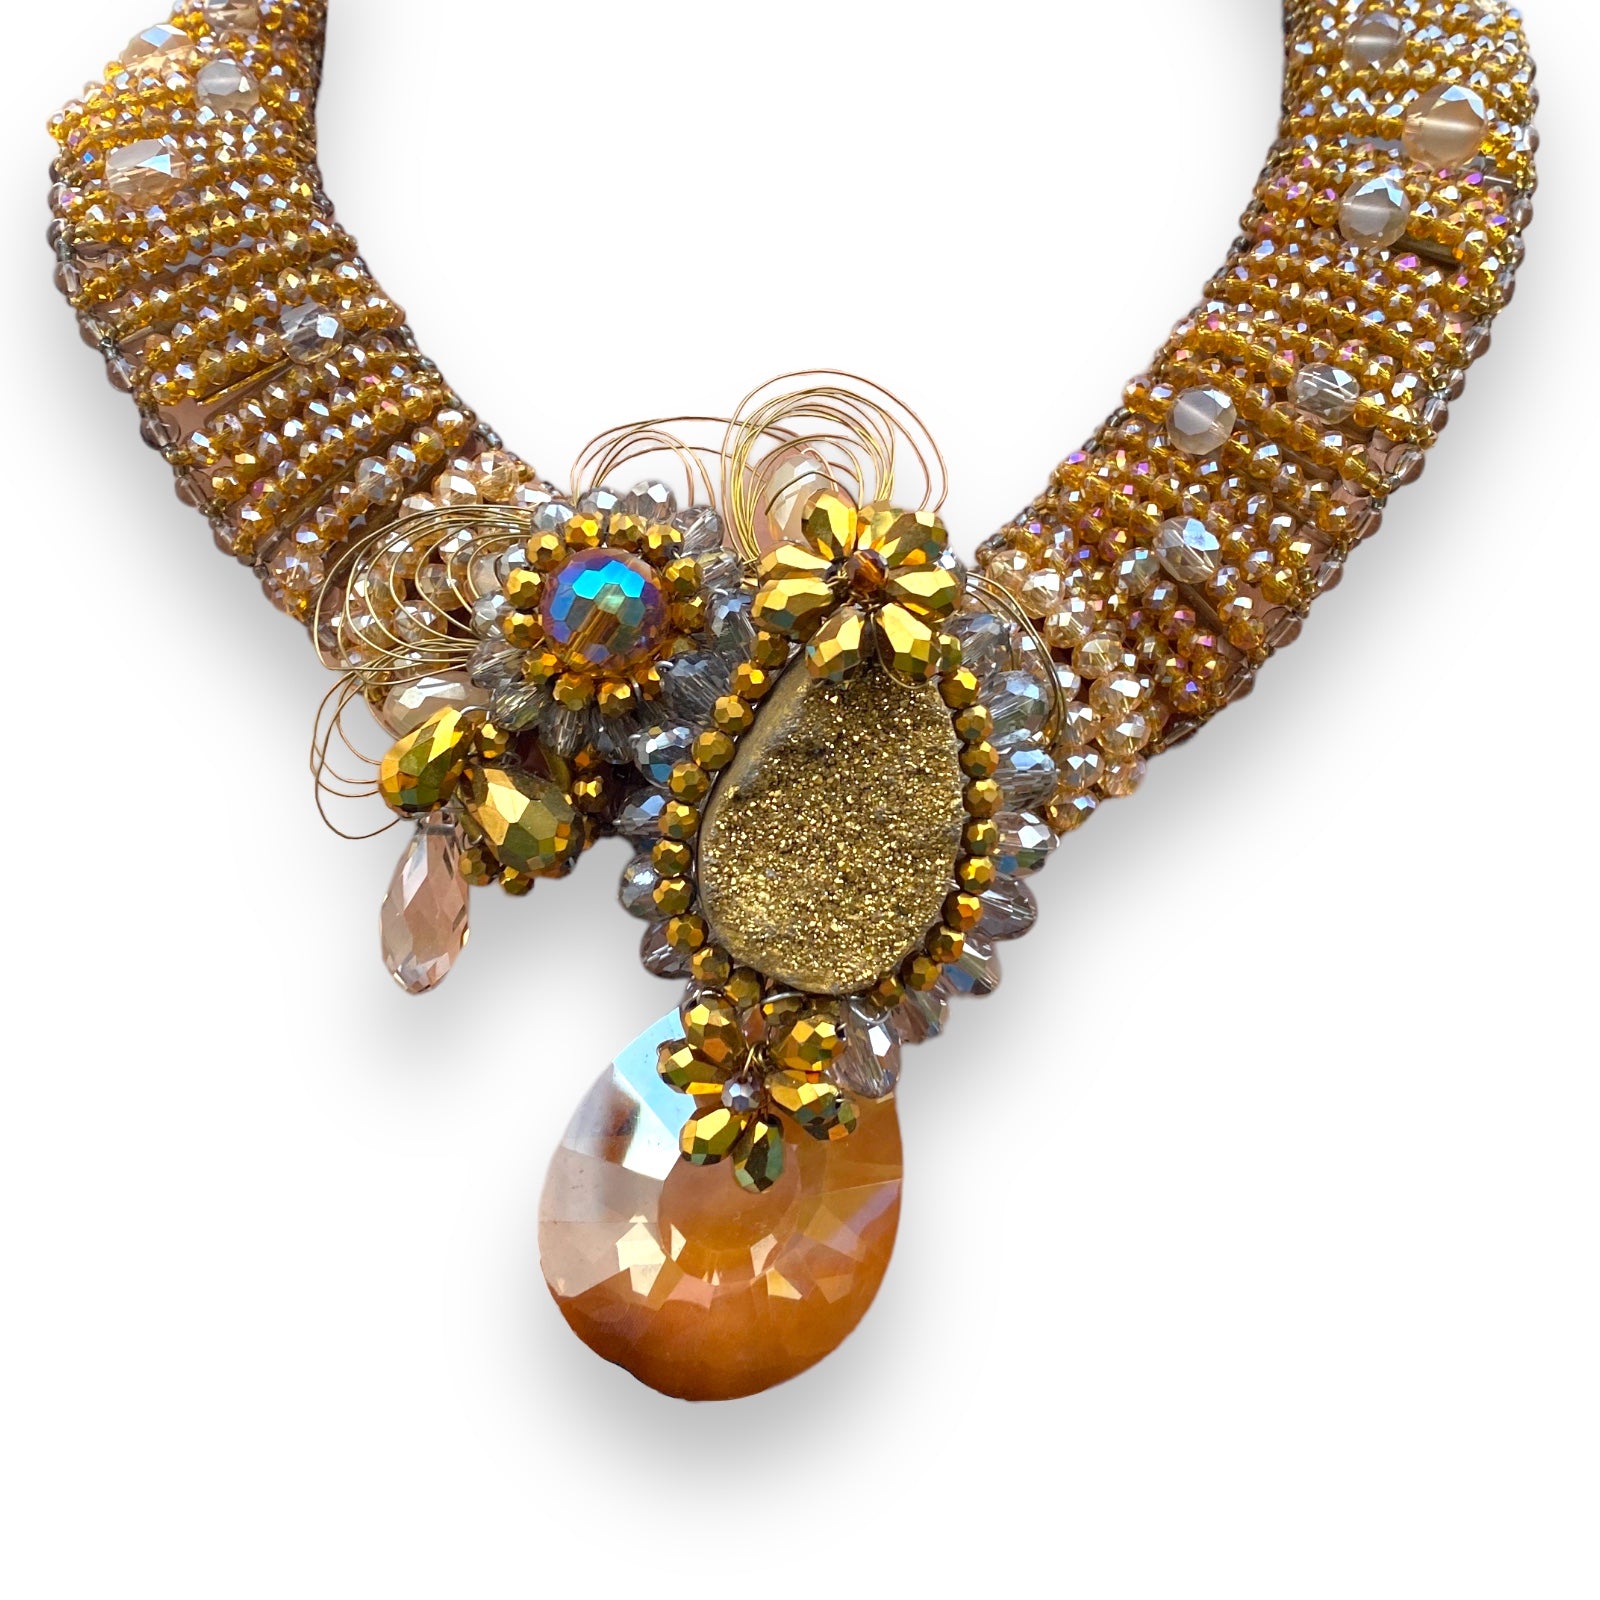 Handmade Necklace 20" Champagne Color Beads Unique Pendant Choker